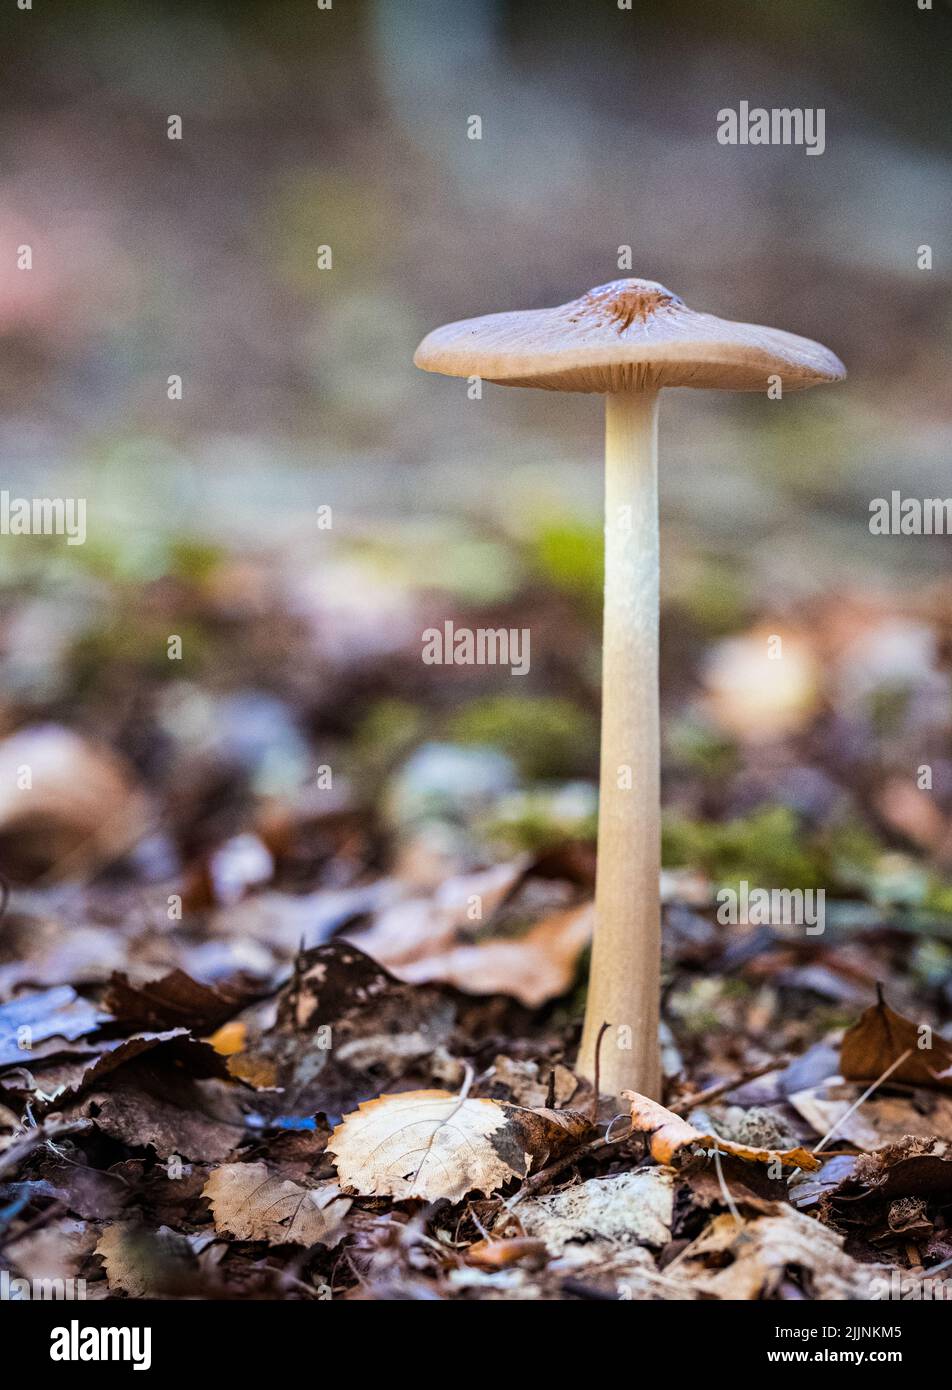 A closeup shot of a mushroom foraging walks in Foxholes wood, Moreton-in-the-Marsh Stock Photo